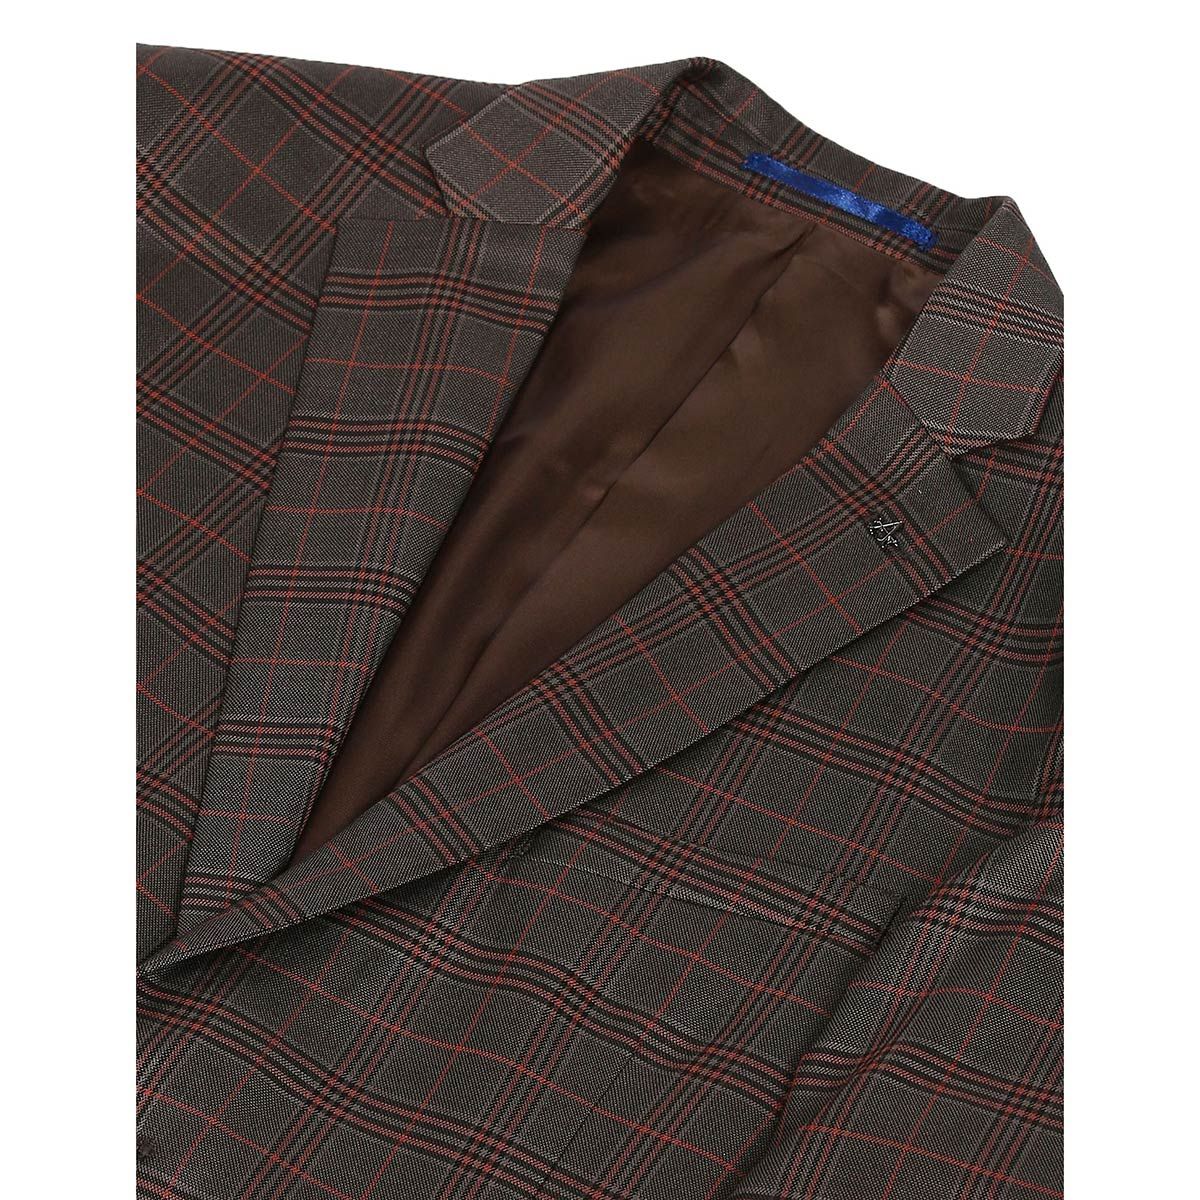 QZI Men's Suit Plaid Notch Lapel Two Button Checked Three Pieces Set  Burgundy at Amazon Men's Clothing store